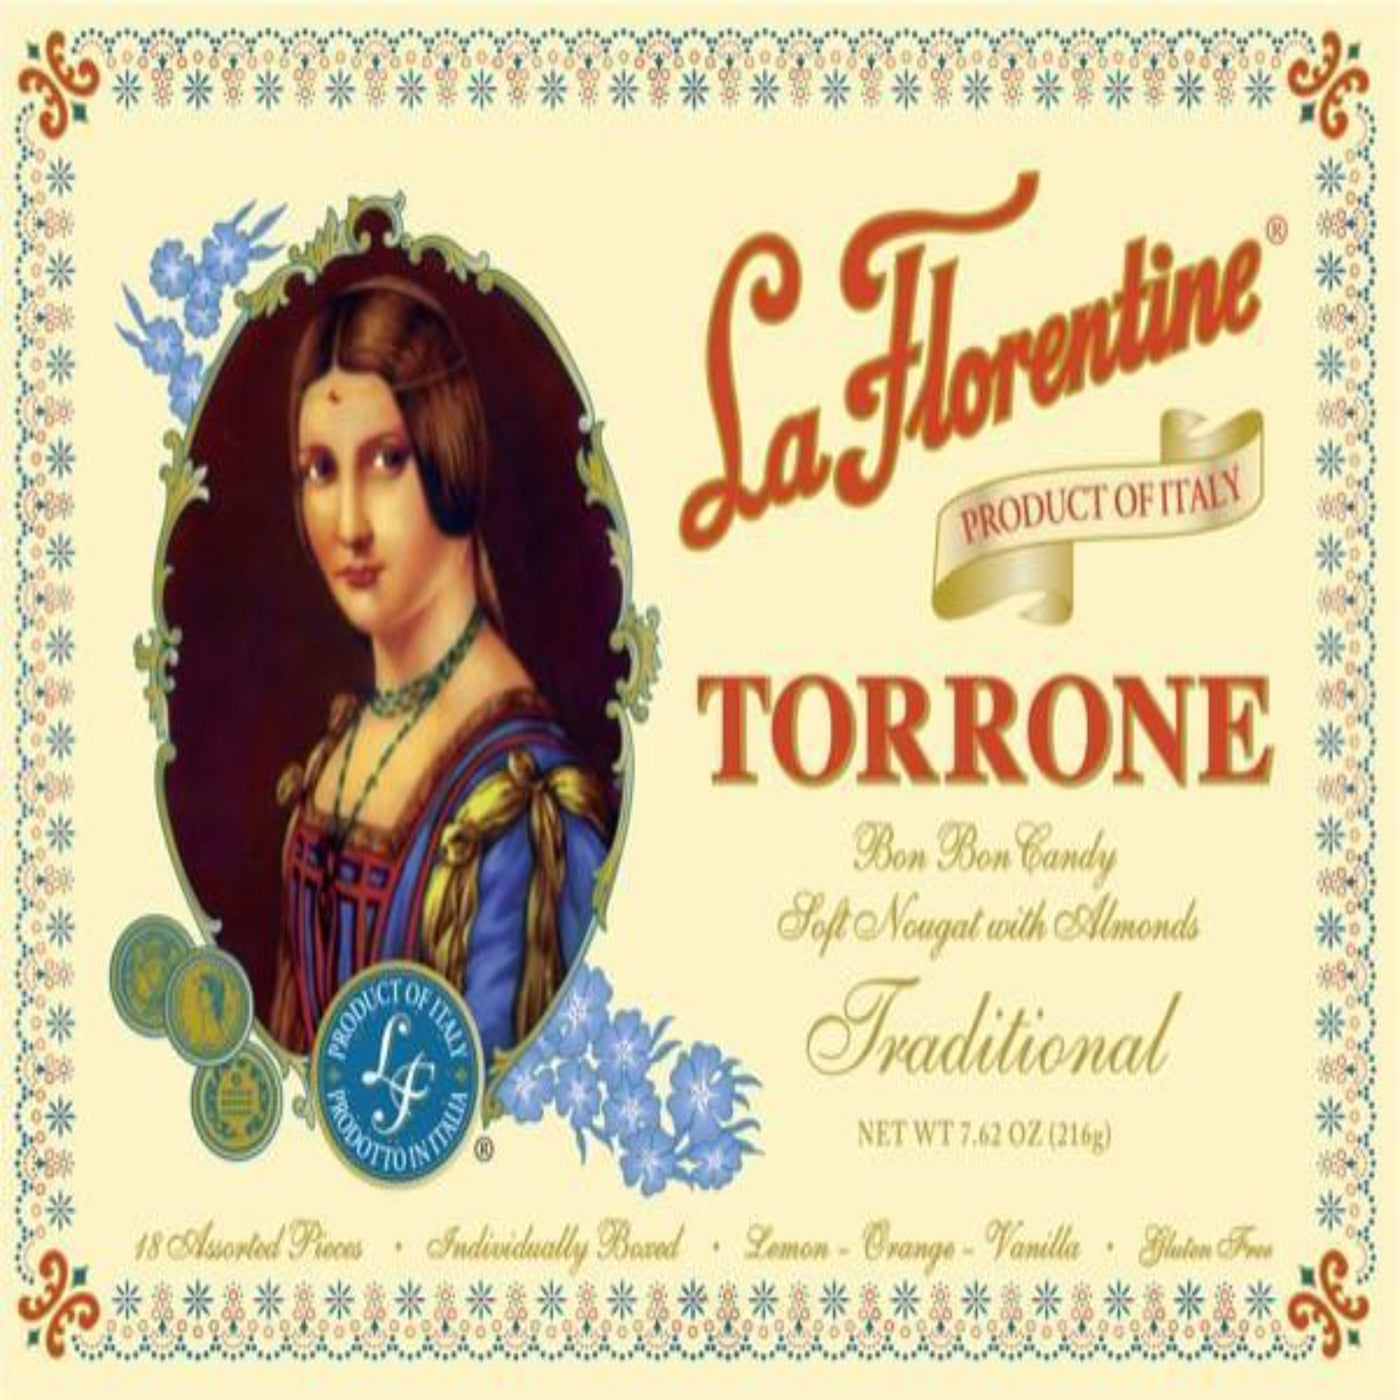 La Florentine Mini Soft Torroni with Almonds , 18 pieces, 7.62 oz